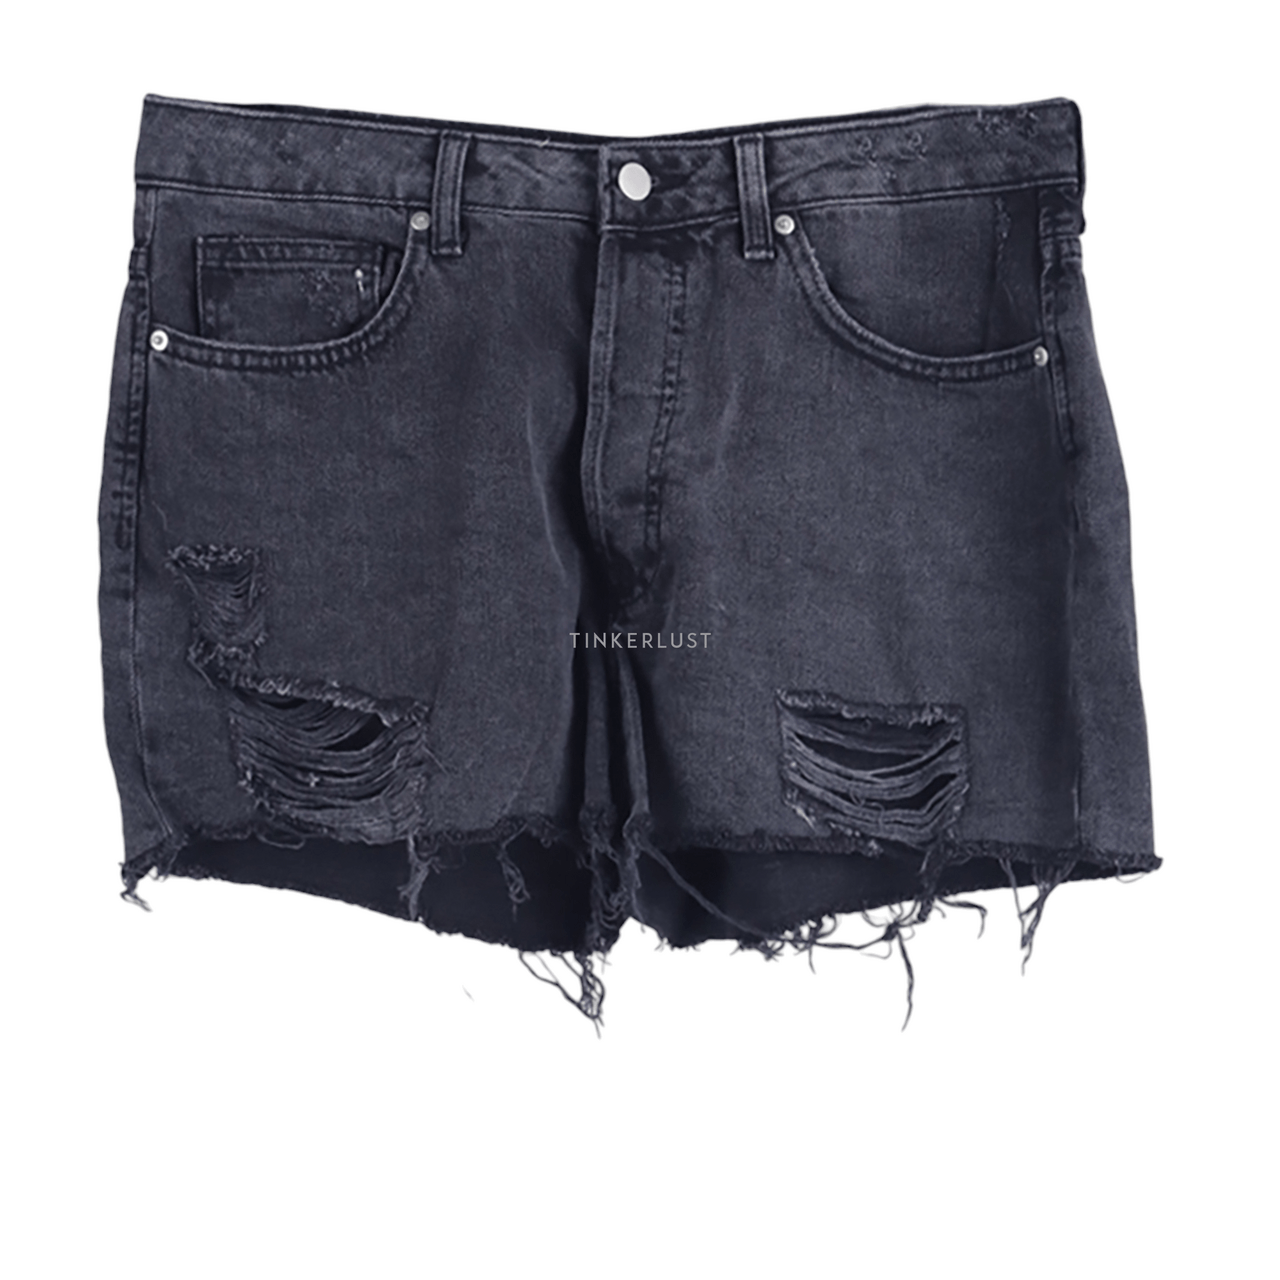 H&M Black Washed Ripped Denim Short Pants